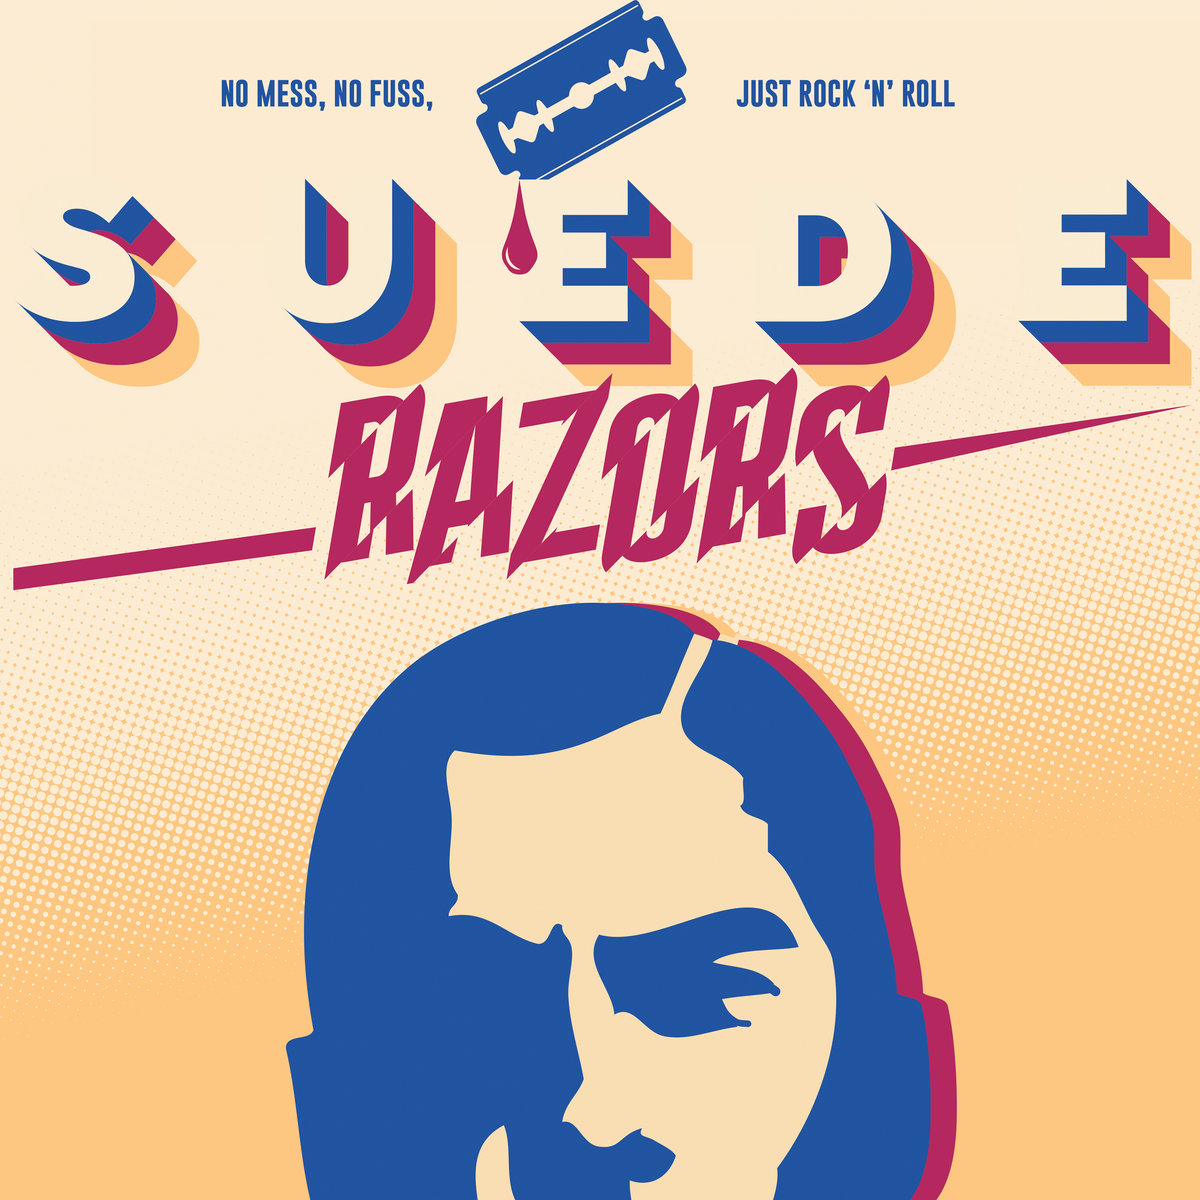 Suede Razors - No Mess, No Fuss, Just Rock 'N' Roll 12"LP